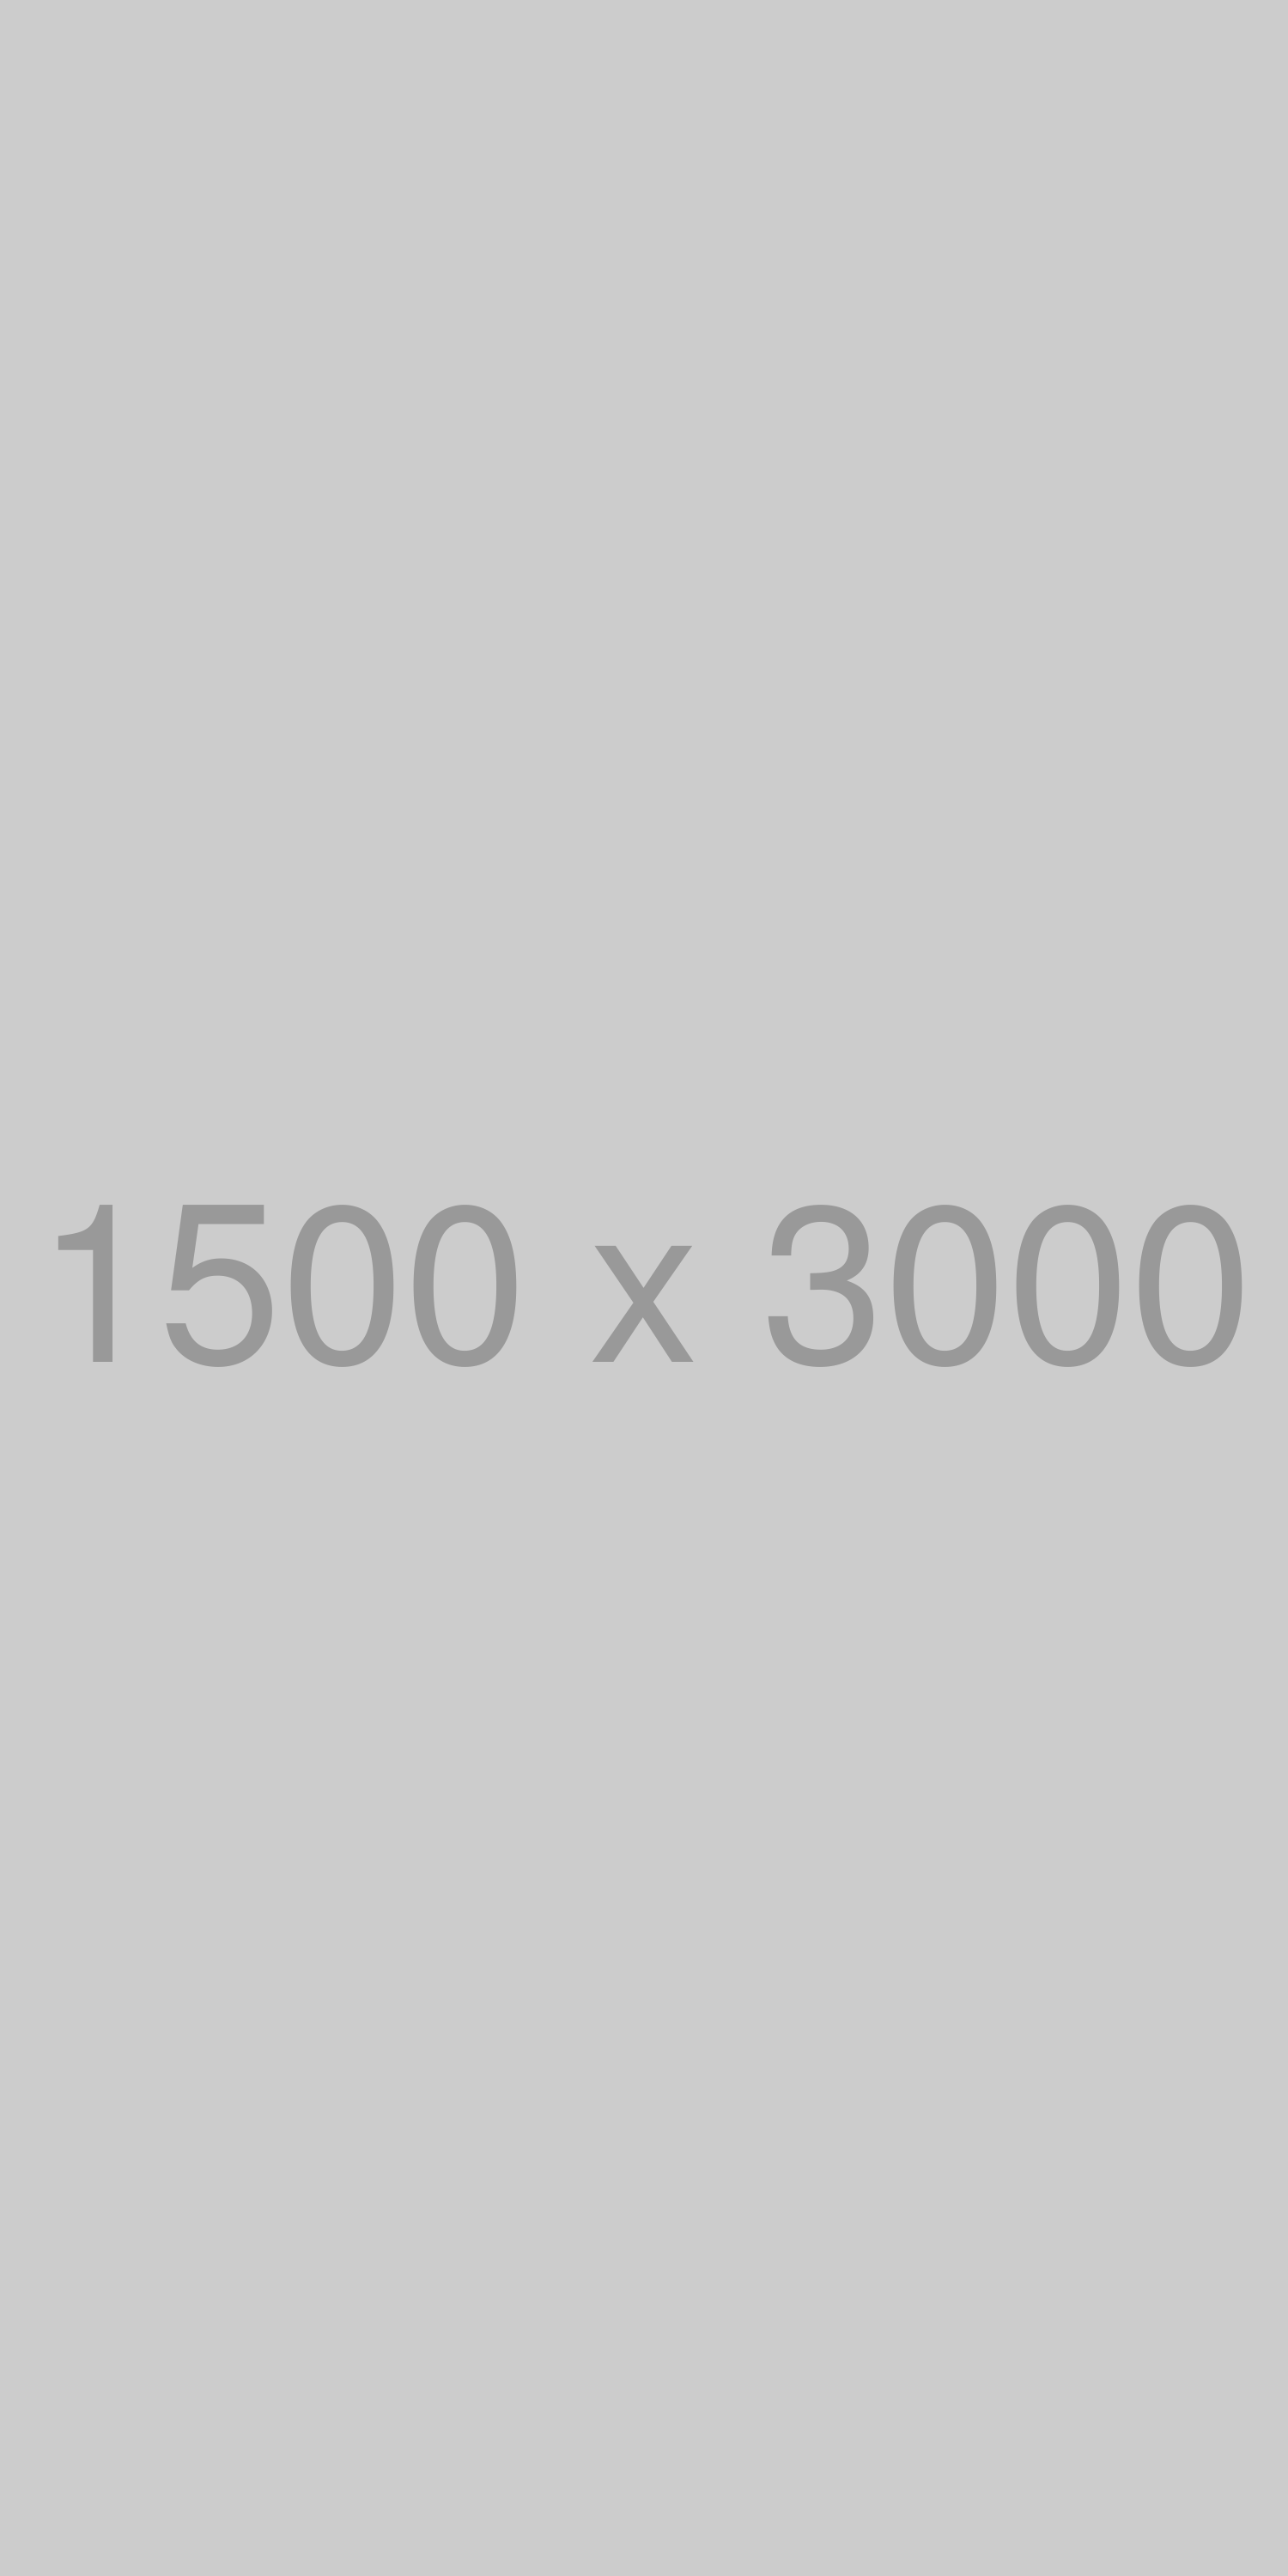 test/1500x3000 ギャラリー写真